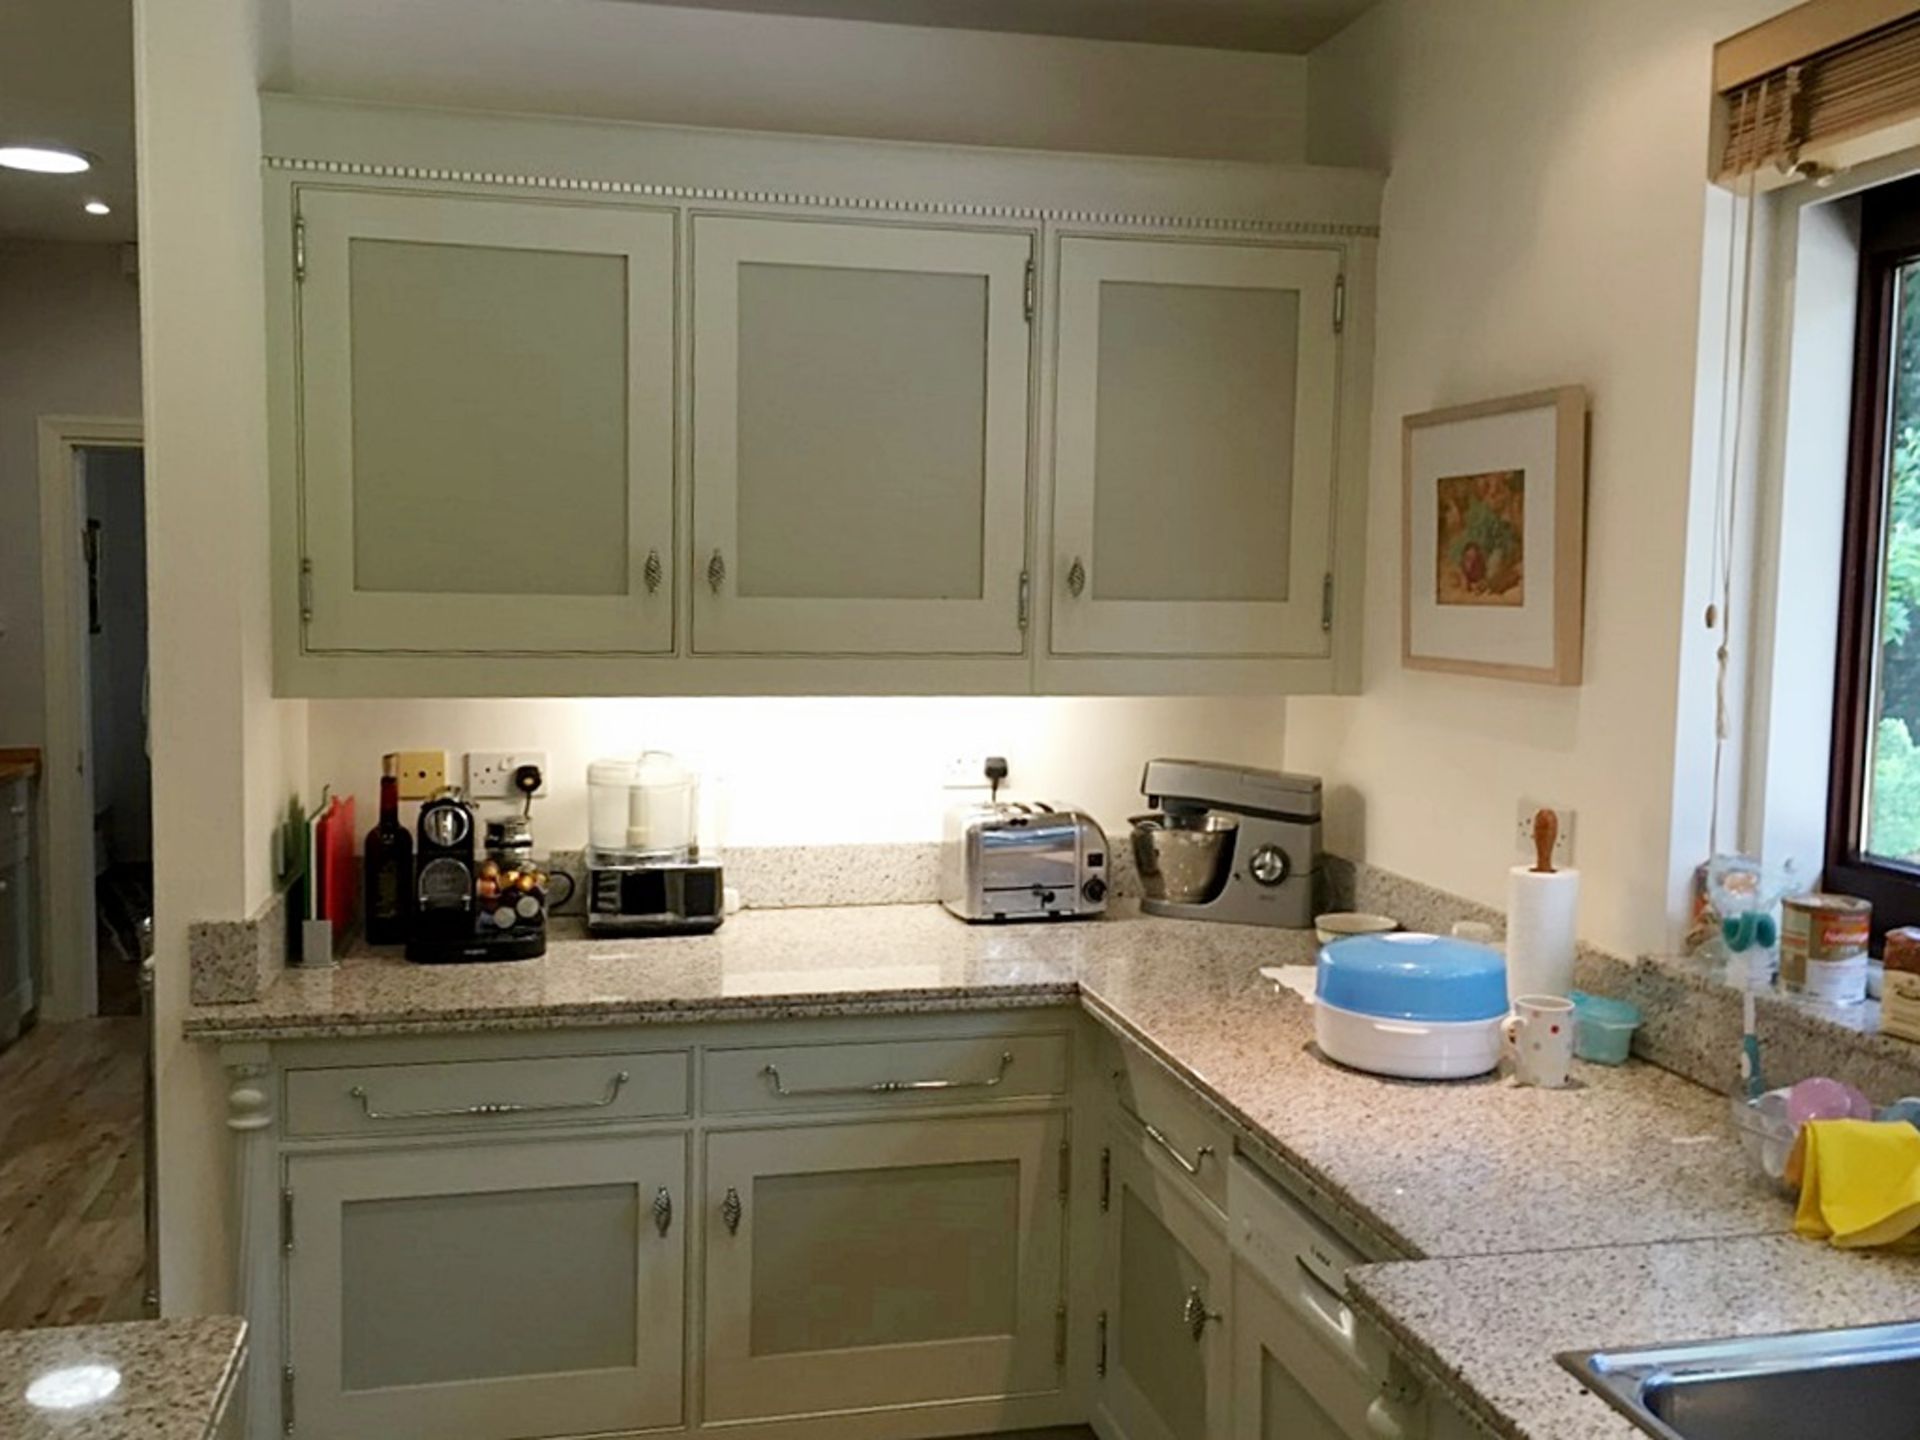 1 x Mark Wilkinson Designer kitchen With Miele Appliances & Granite Worksurfaces - No VAT - Image 3 of 65